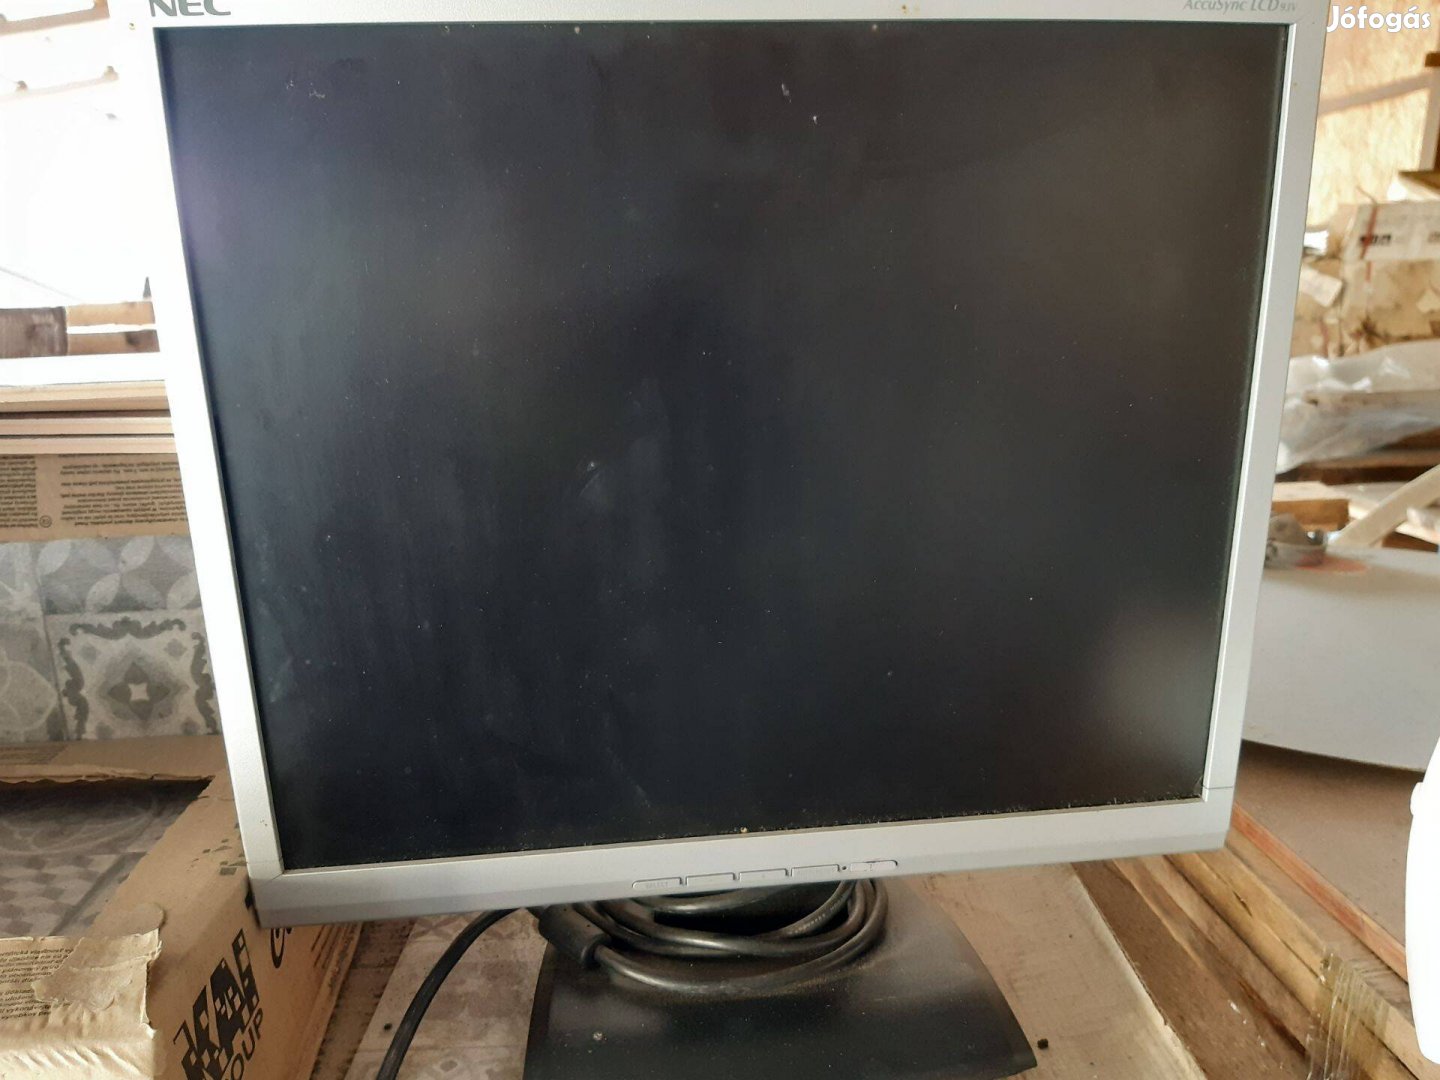 NEC Aslcd93V-BK-1 monitor